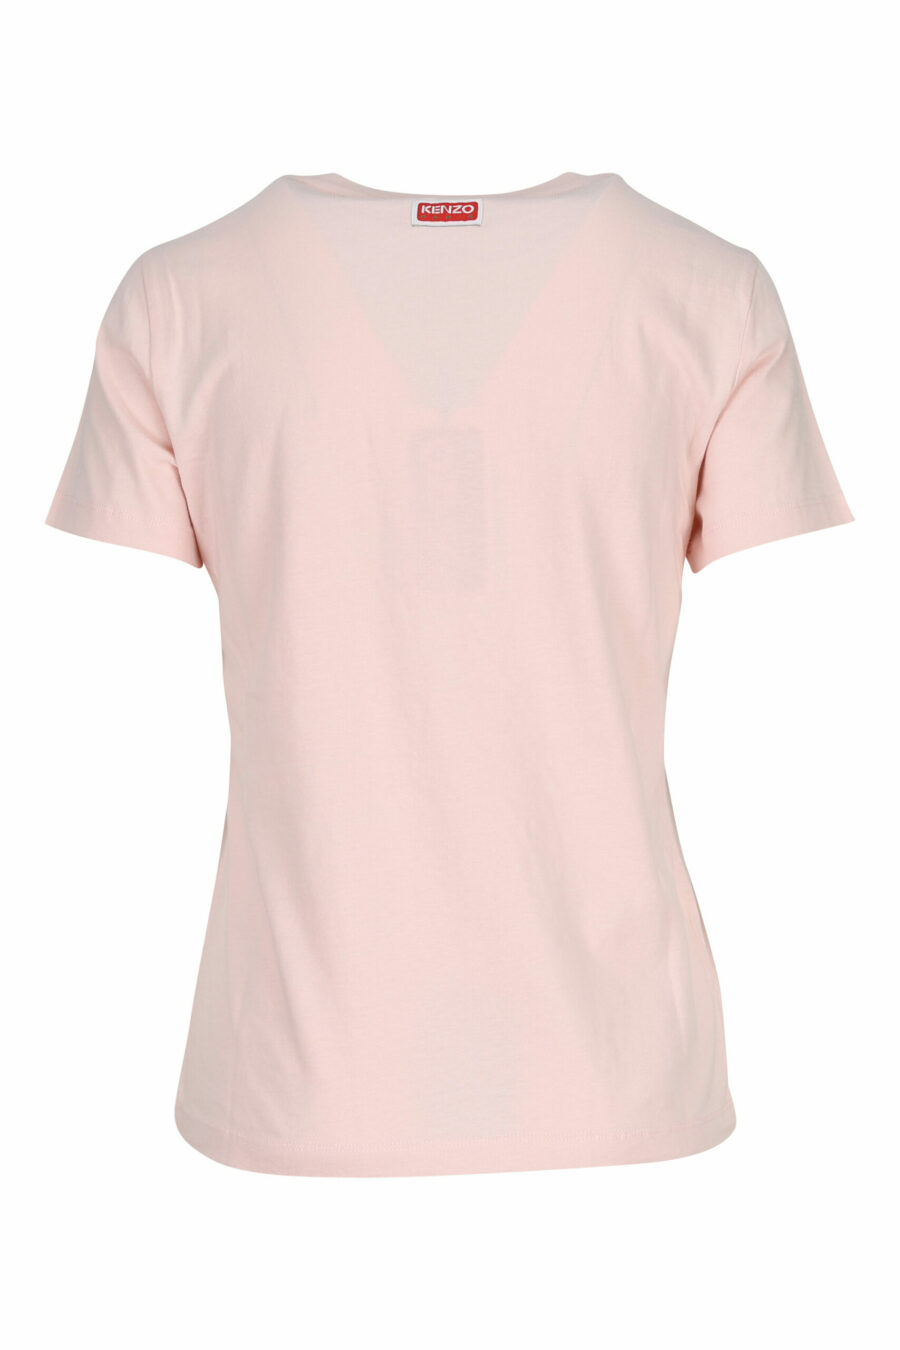 Camiseta rosa con minilogo "kenzo elephant" - 3612230620056 1 scaled